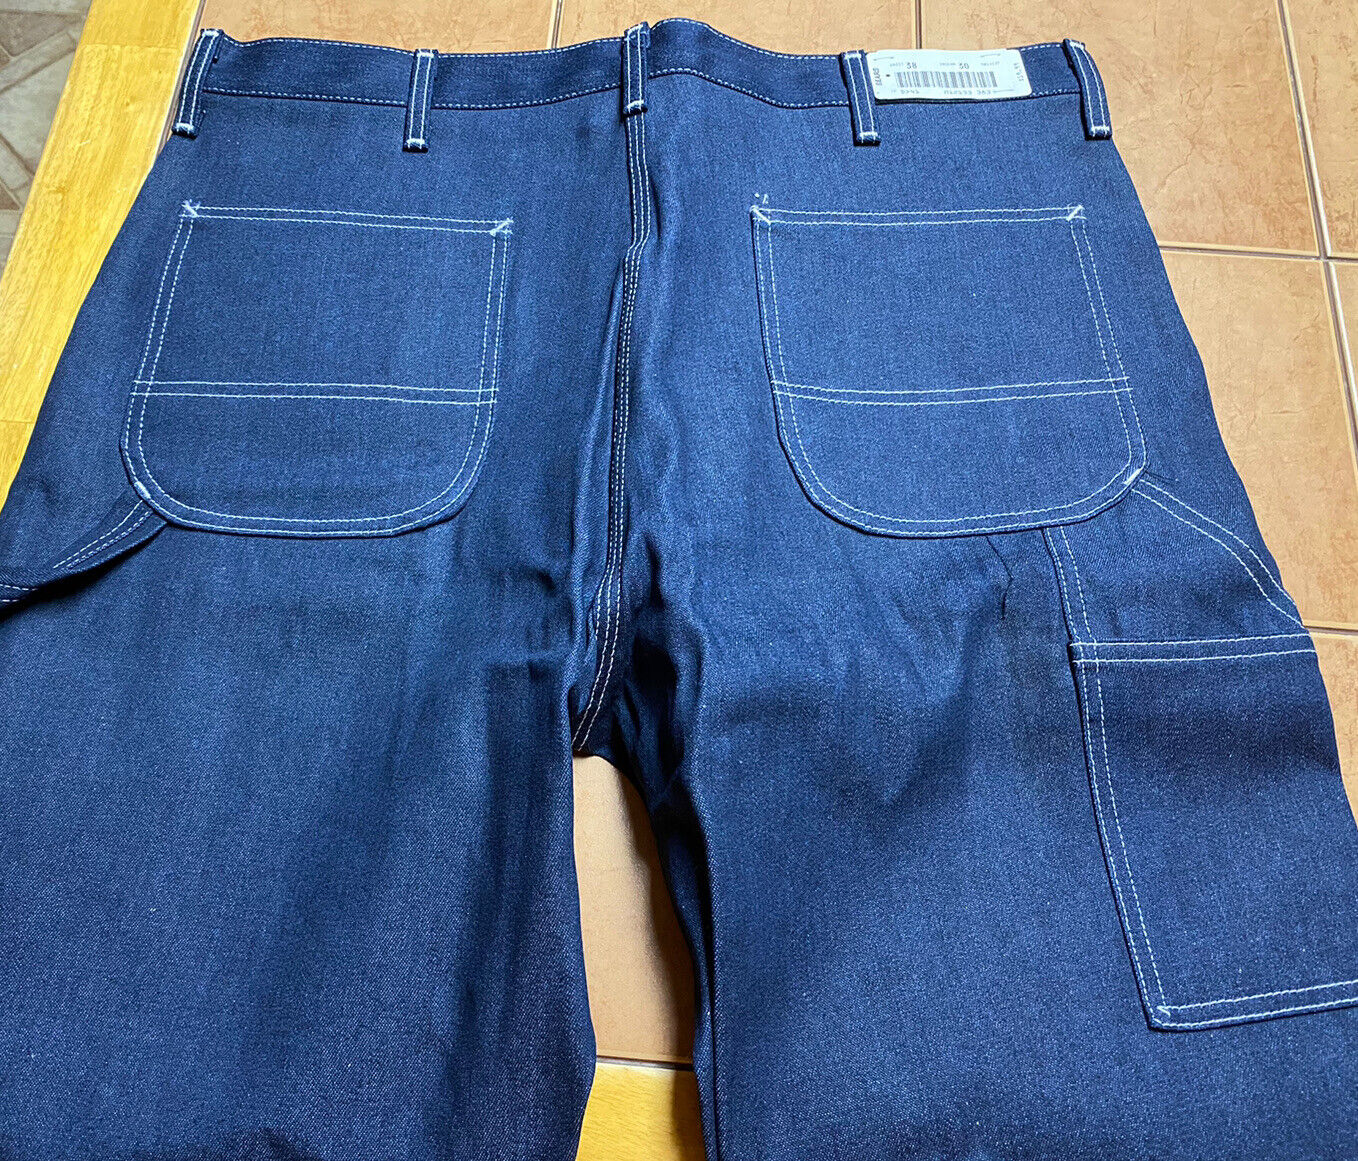 NEW Roebucks Sears WearTuff Vintage Carpenter Dark Blue Jeans Sz 38 x 30 NWT USA